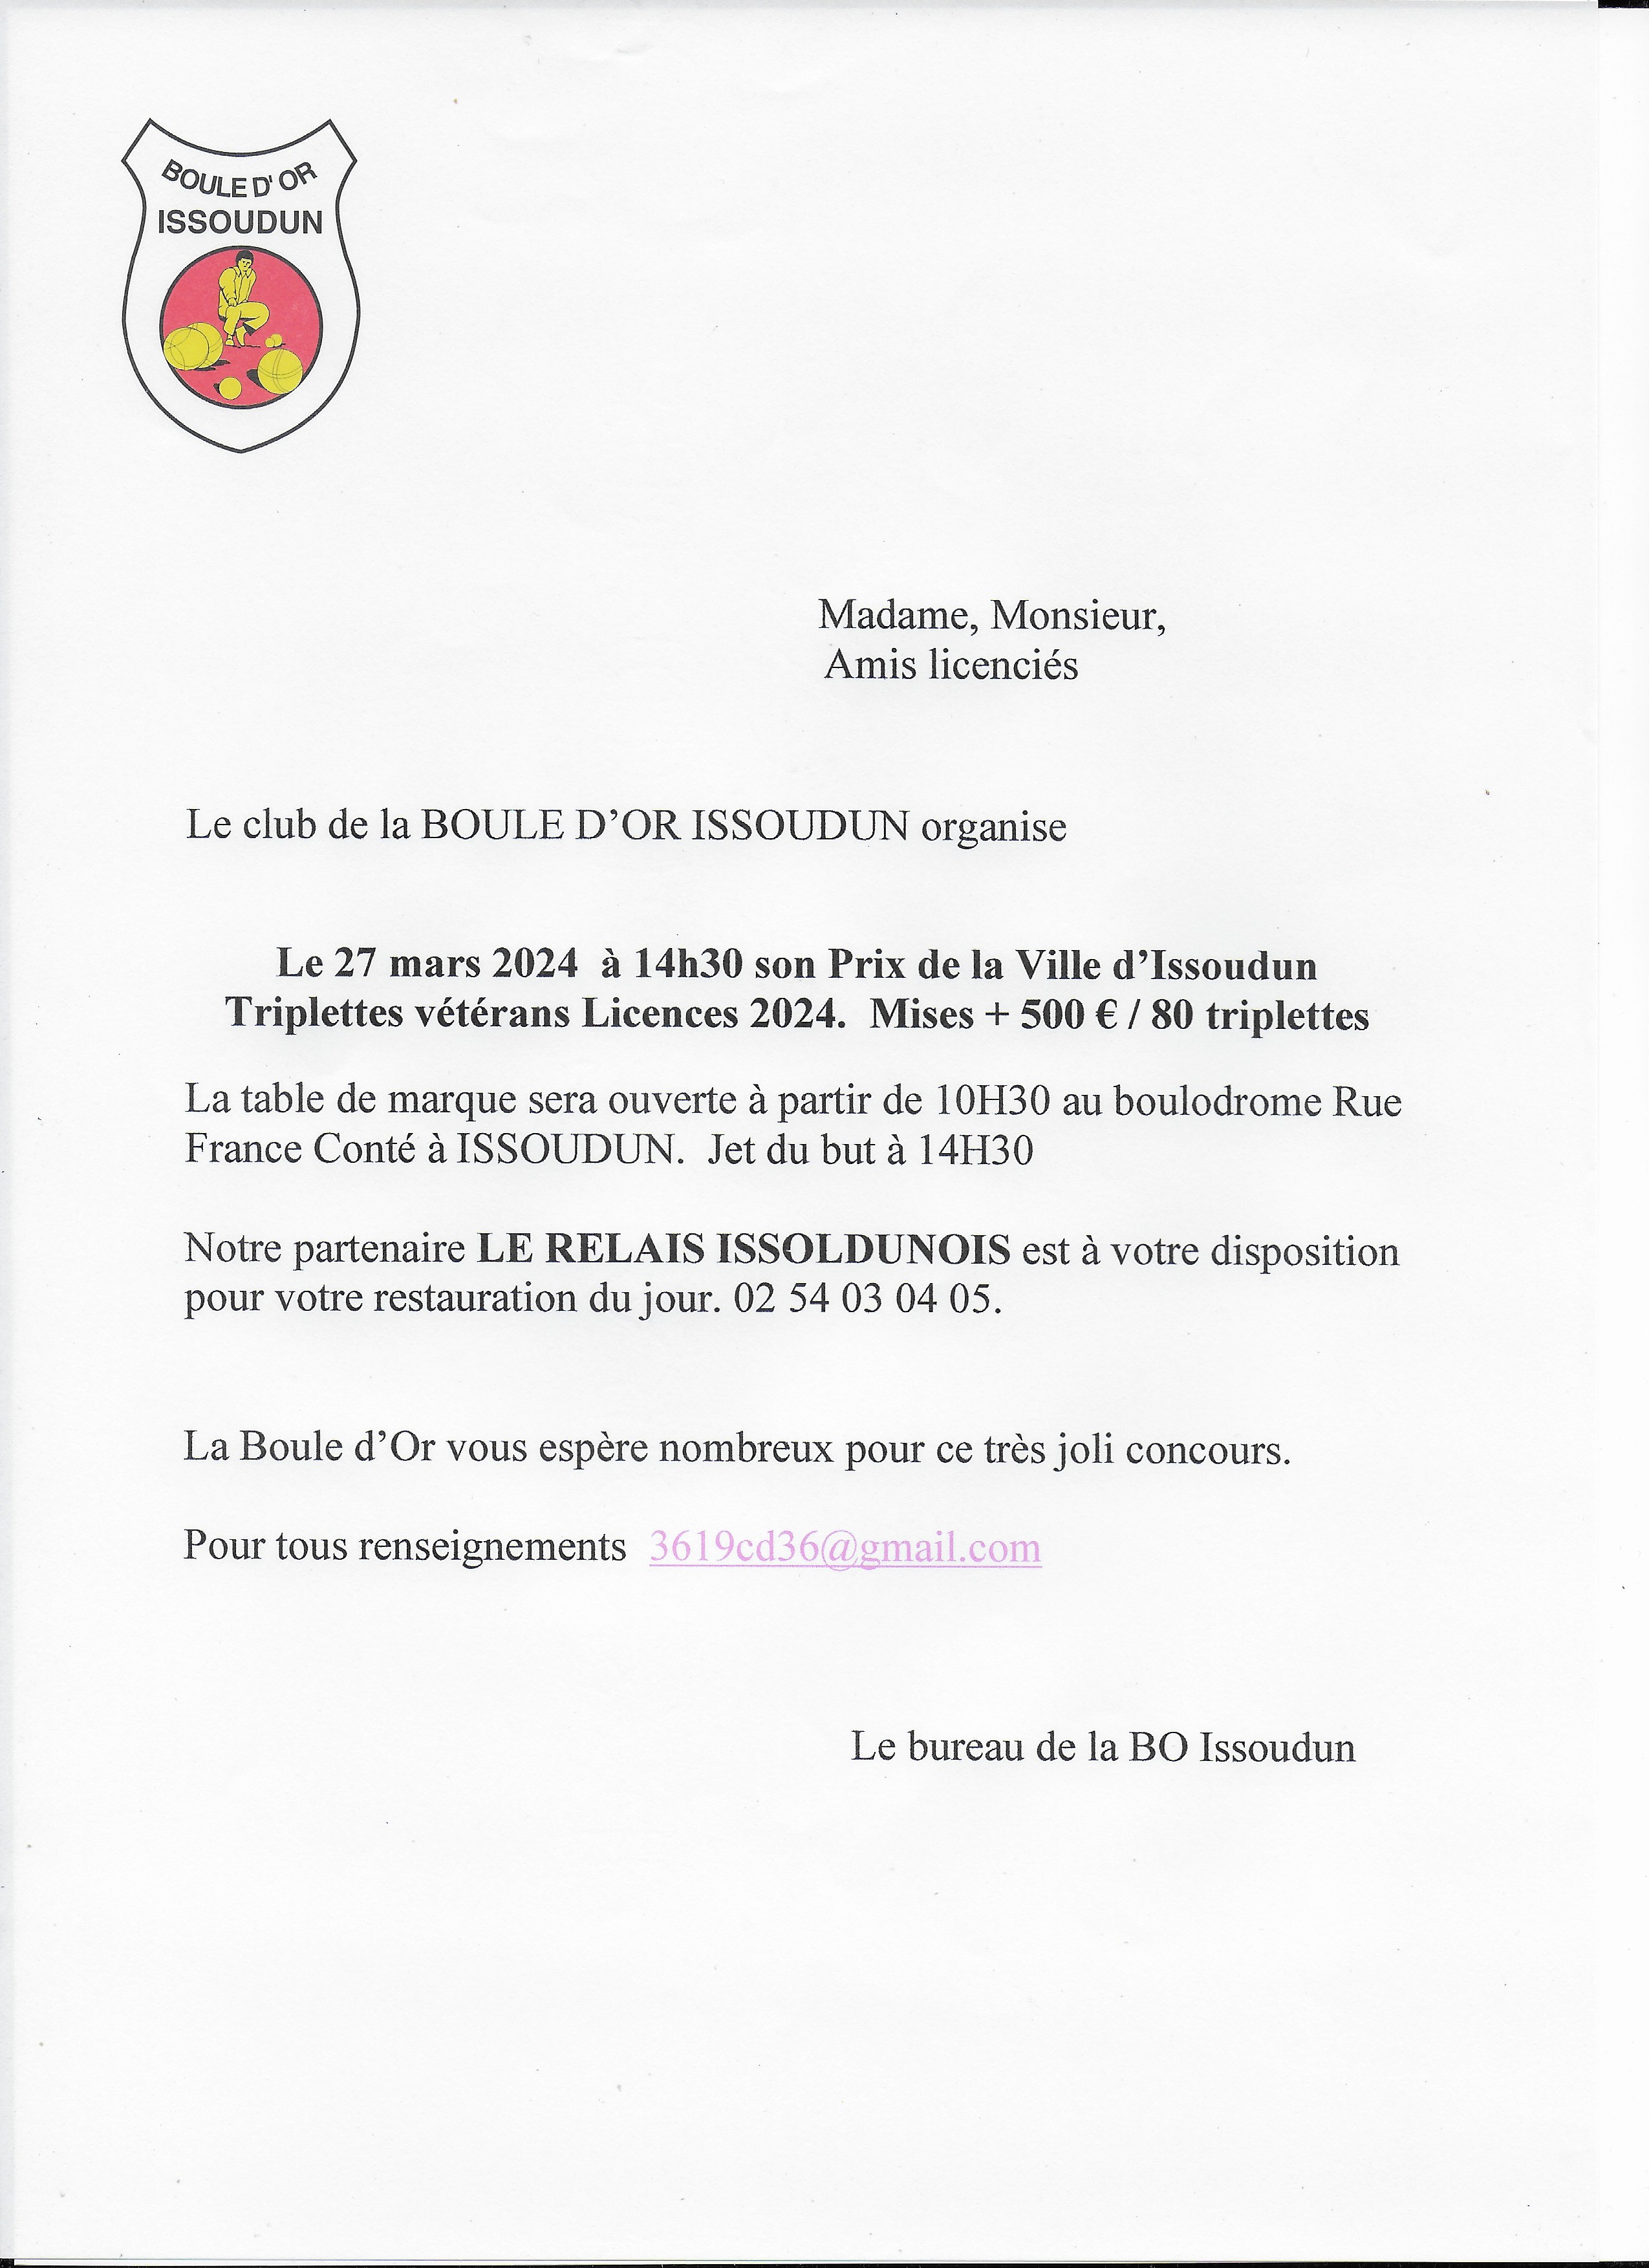 PRIX DE LA VILLE D'ISSOUDUN - TRIPLETTE VETERAN - 27 mars 2024